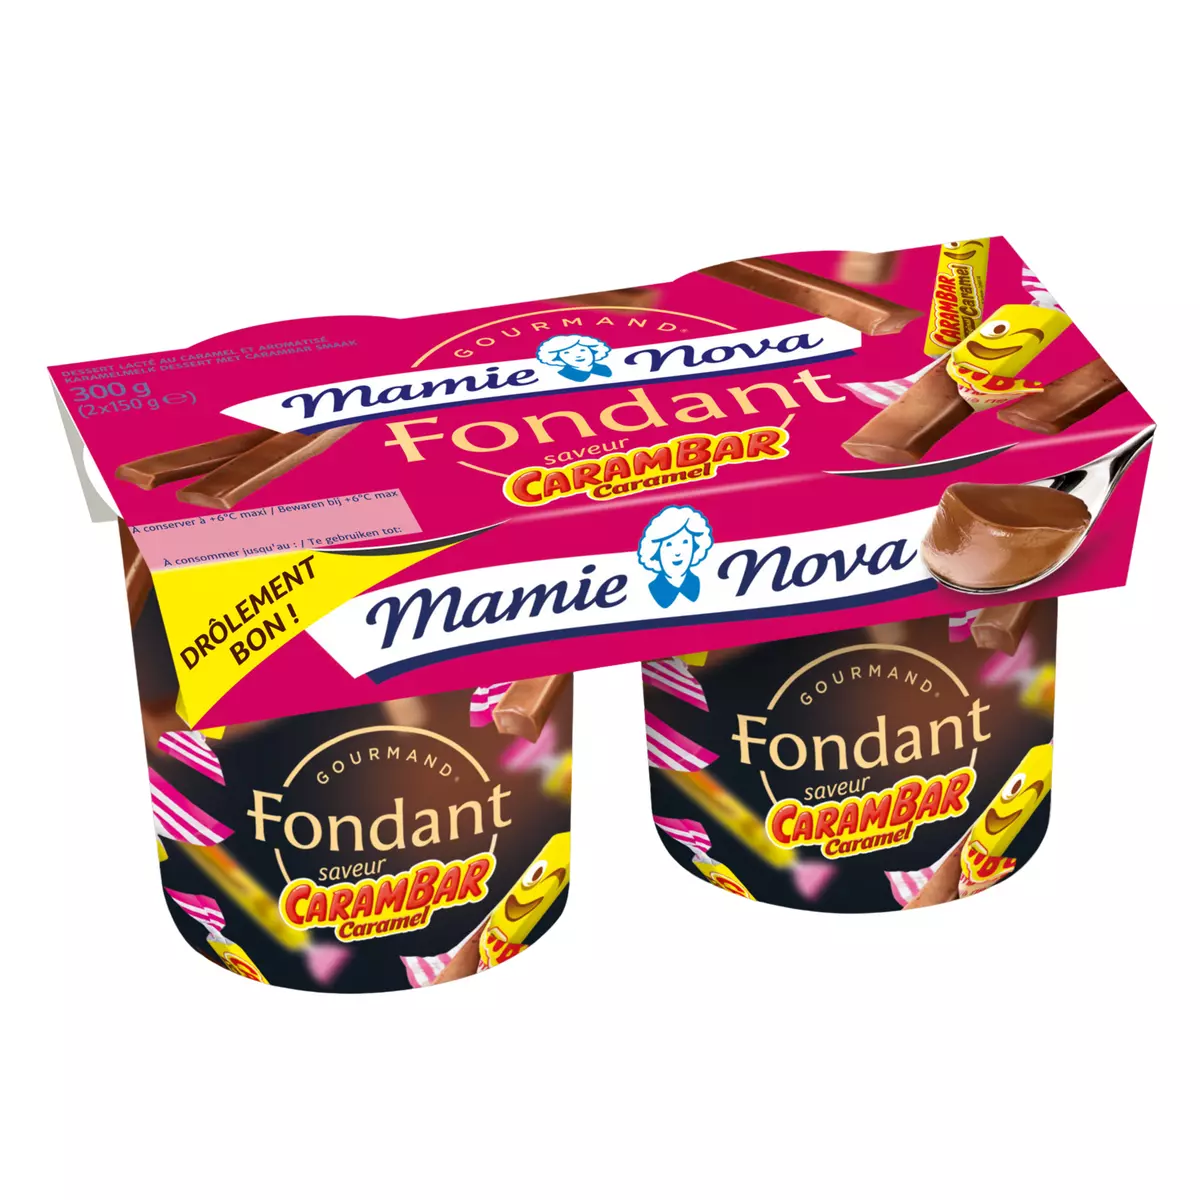 MAMIE NOVA Le fondant - Dessert saveur Carambar caramel 2x150g